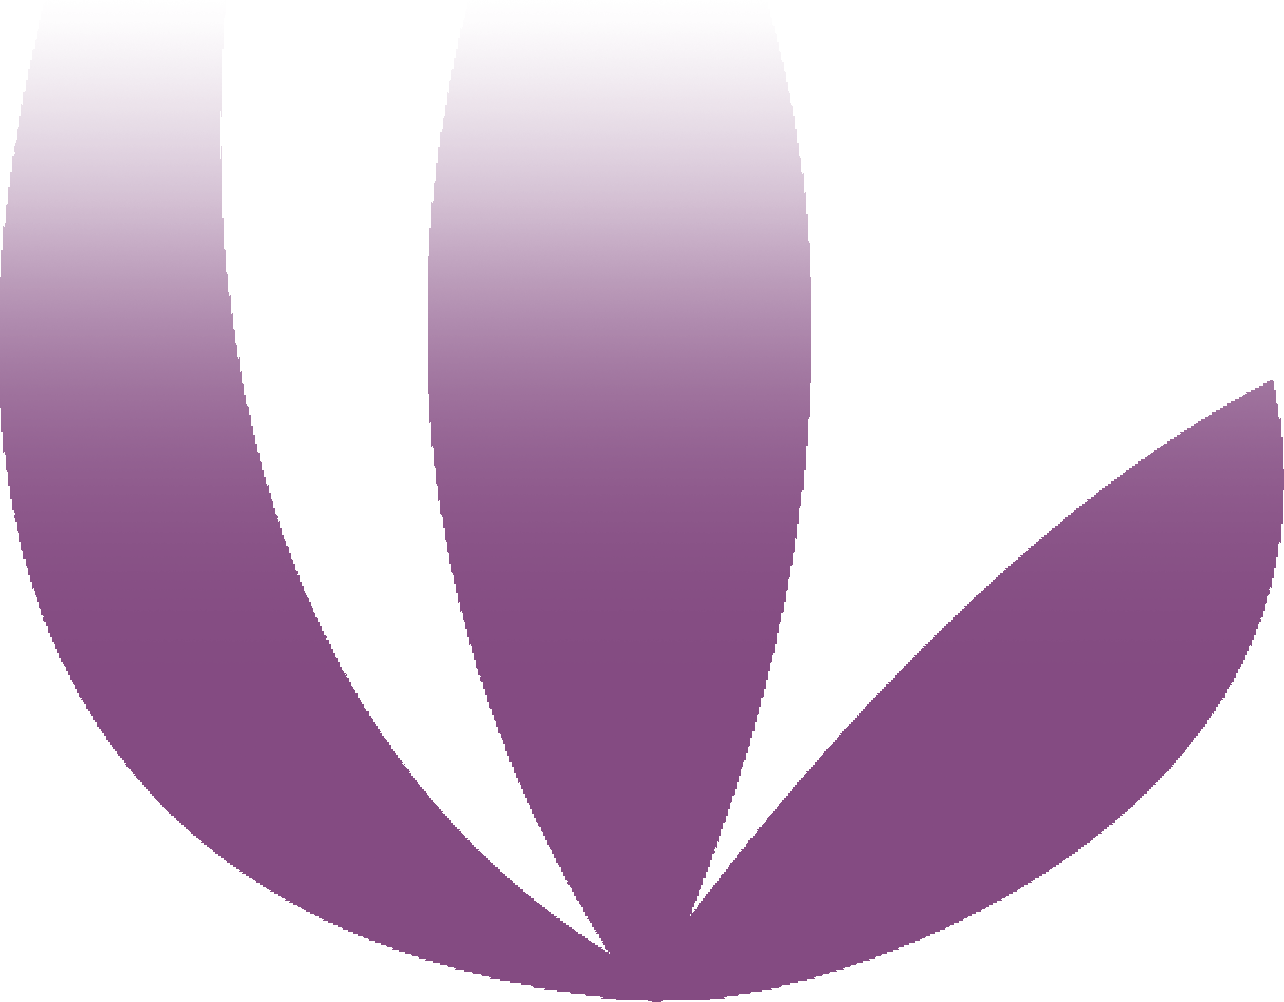 omeopatia udine logo pinzani